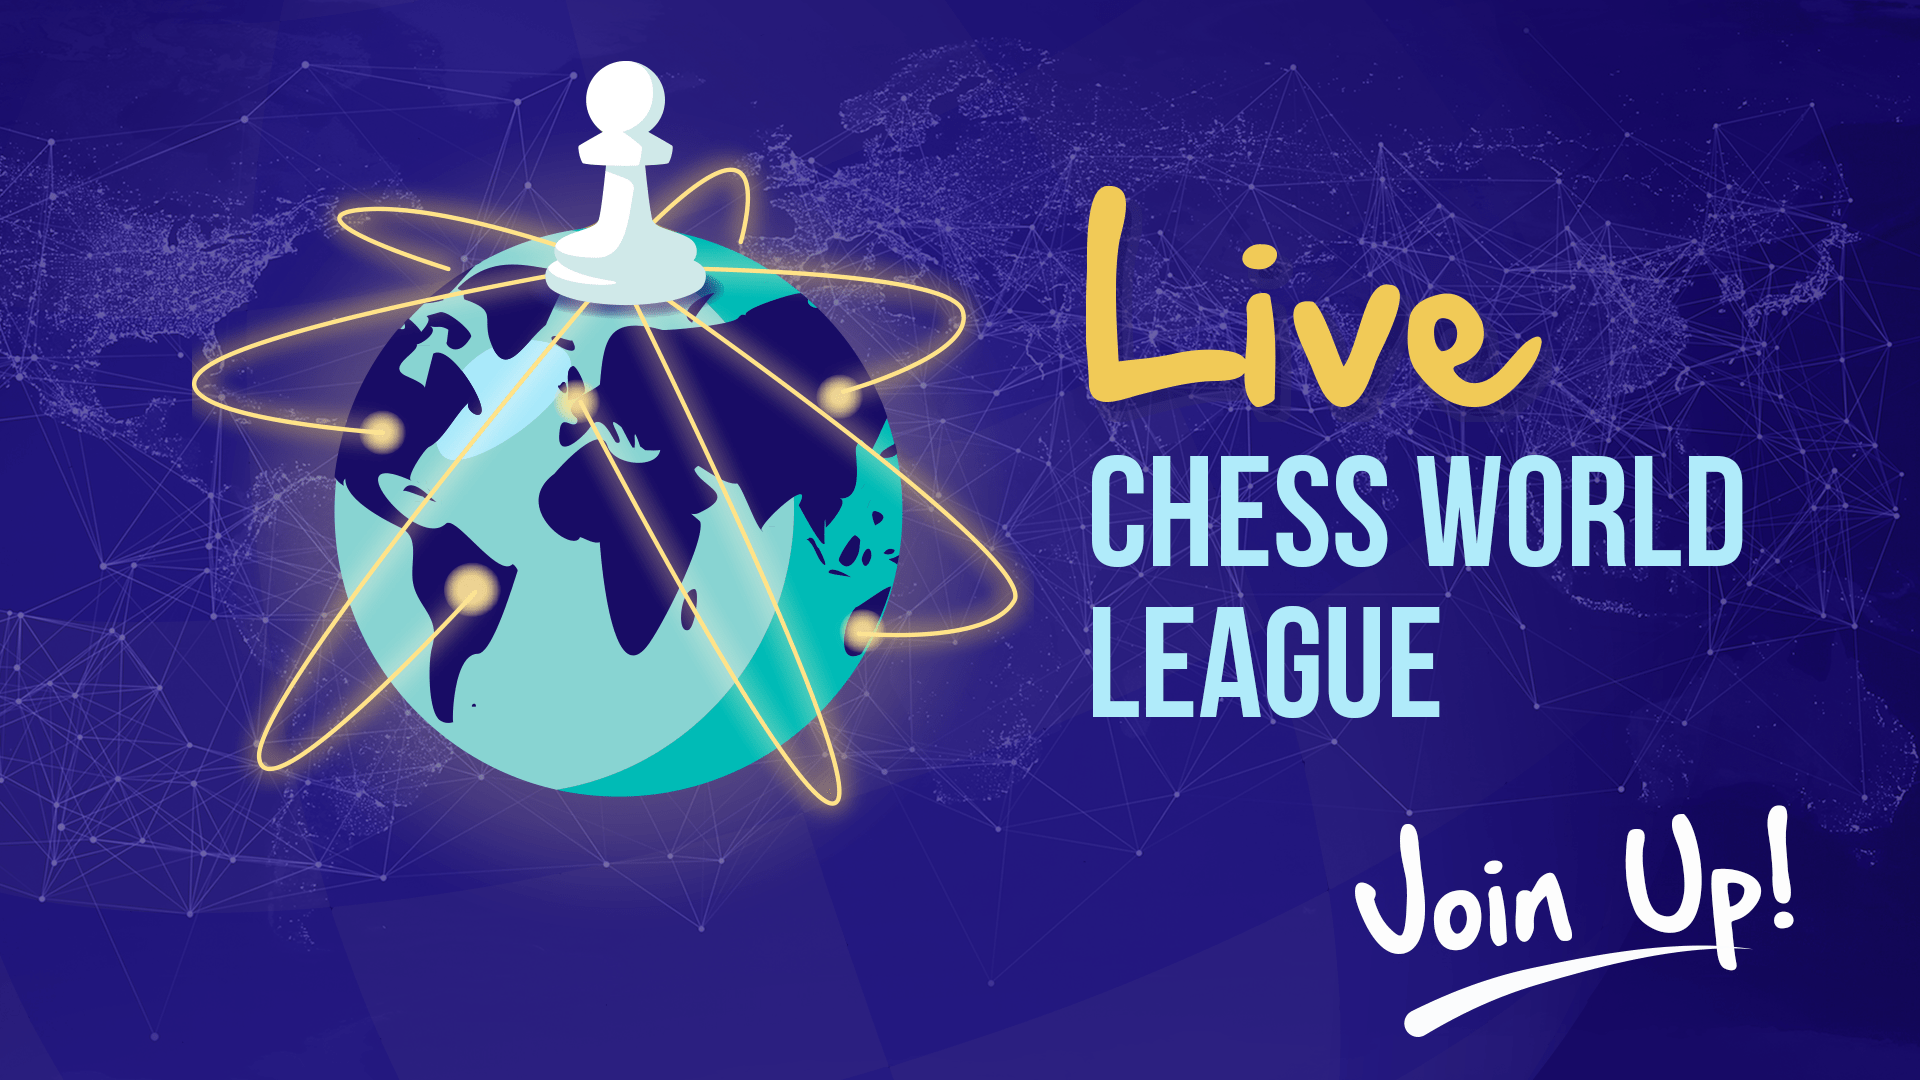 Play The Live Chess World League Season 5 